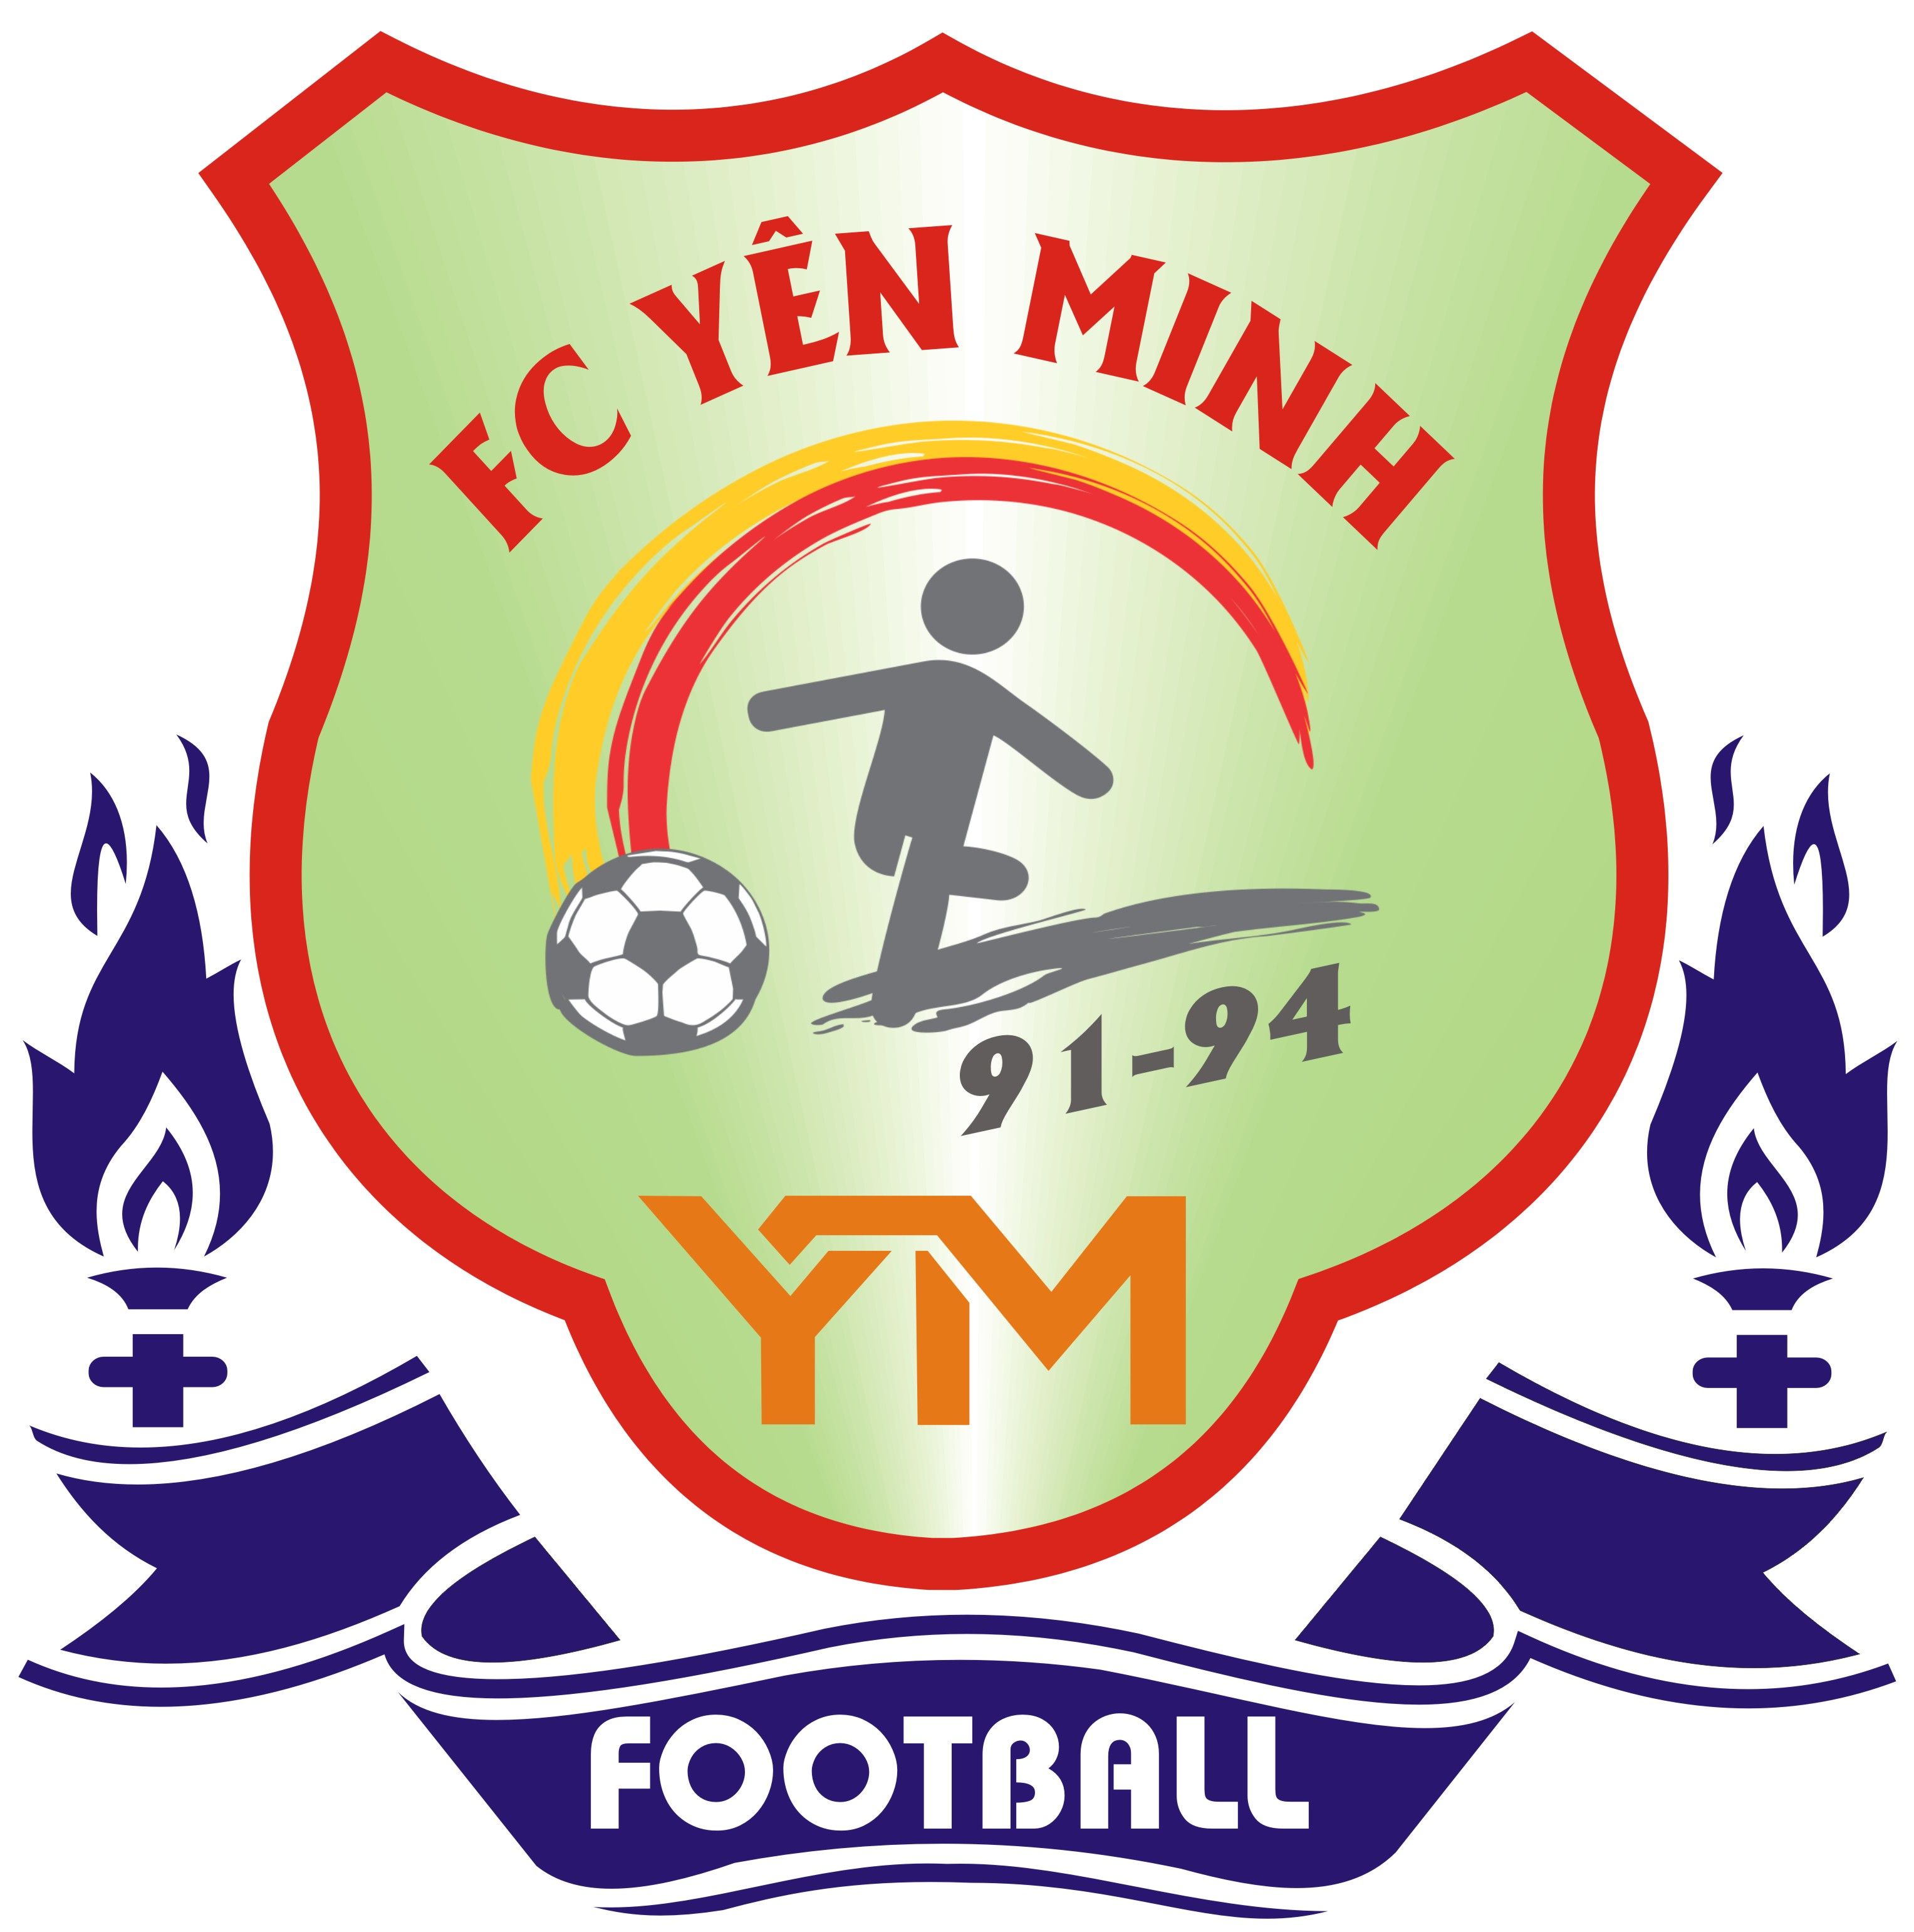 FC Yên Minh 9194